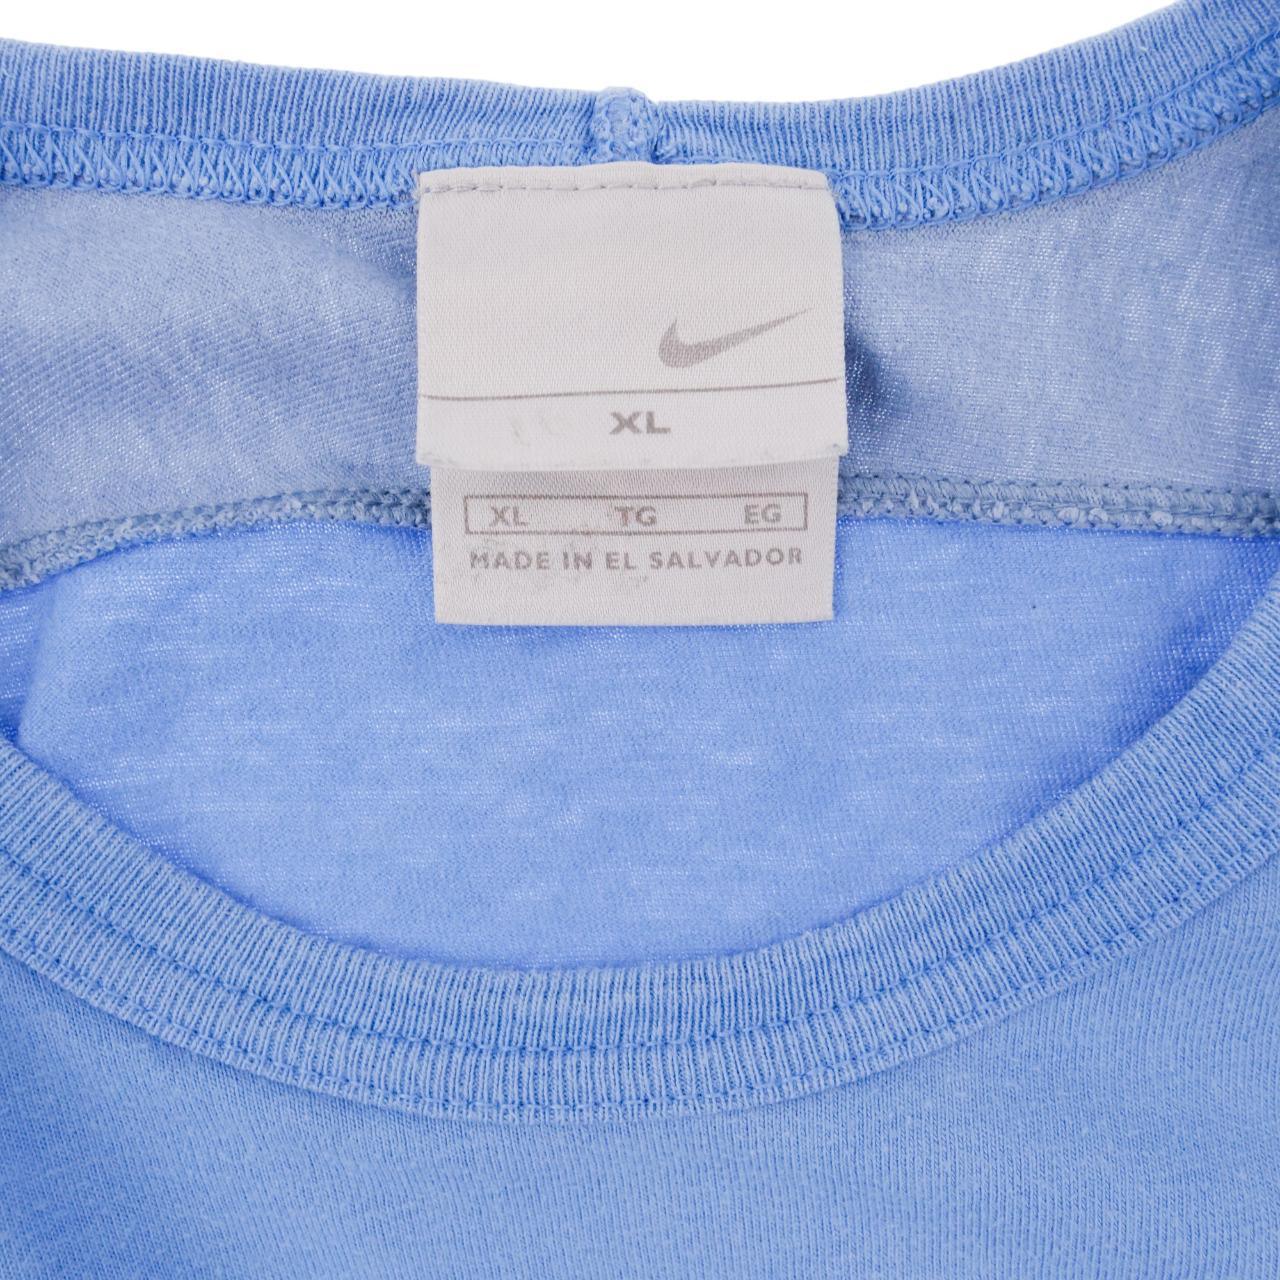 Vintage Nike Air Logo T Shirt Size L - Known Source